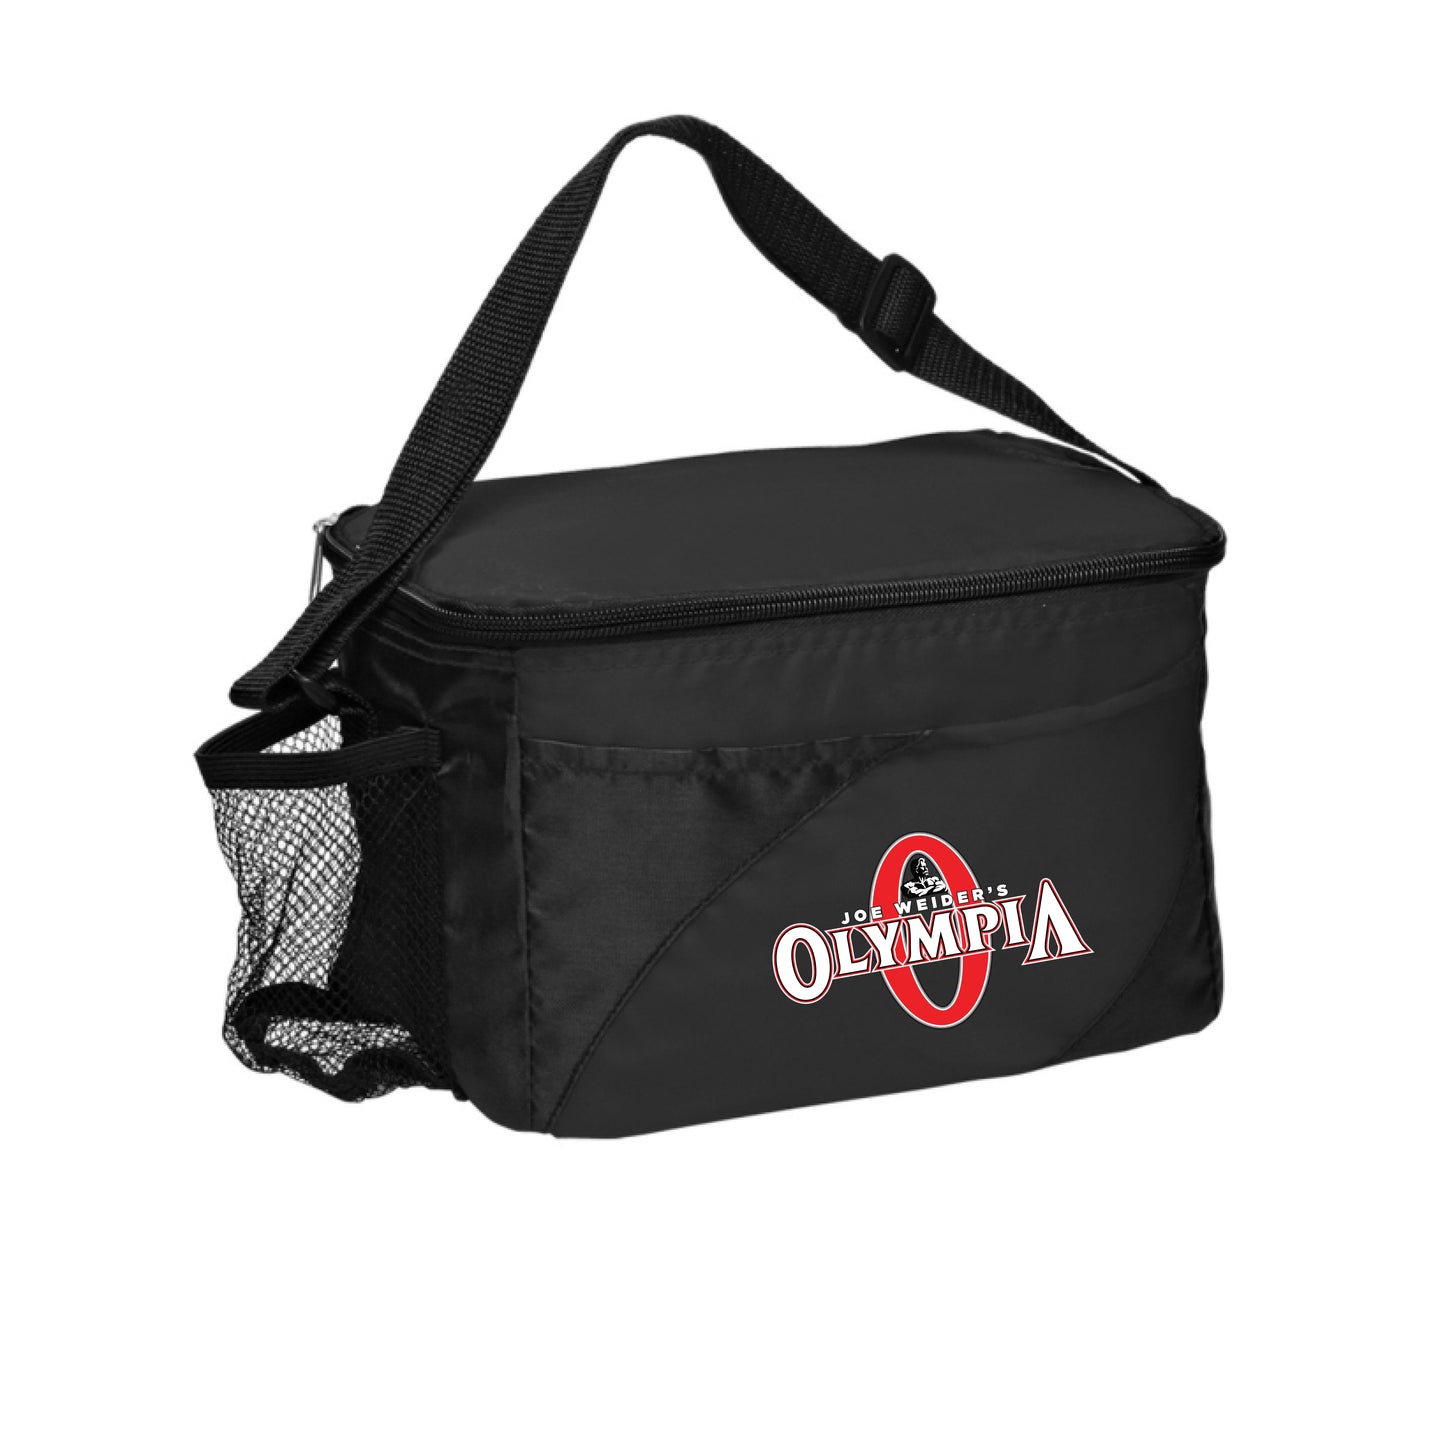 Olympia Cooler Bag Black